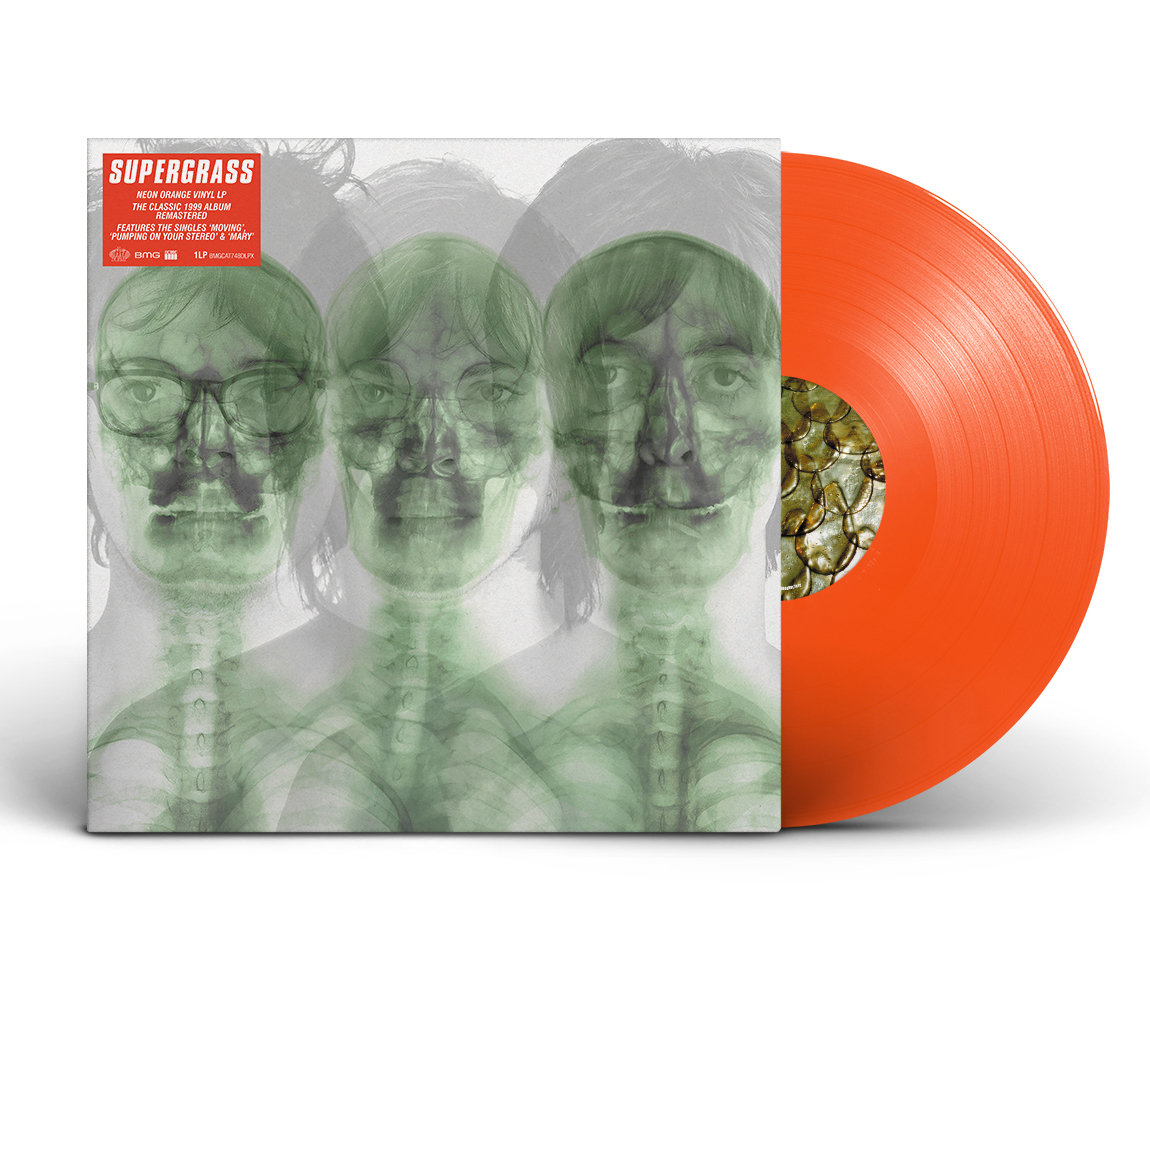 Peaches & Herb : Worth The Wait (LP, Vinyl record album) -- Dusty